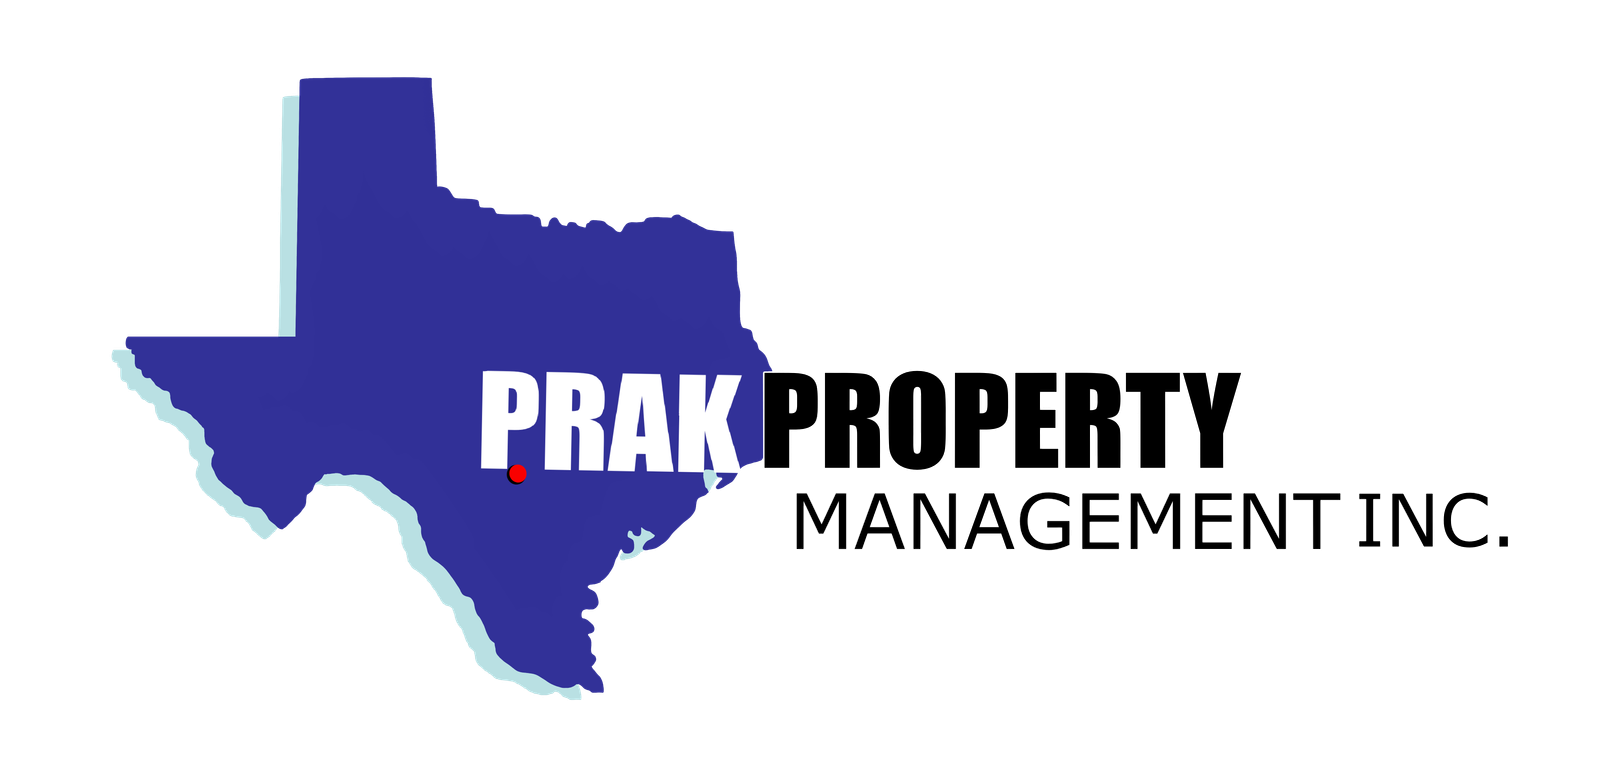 Prak Property Management Inc